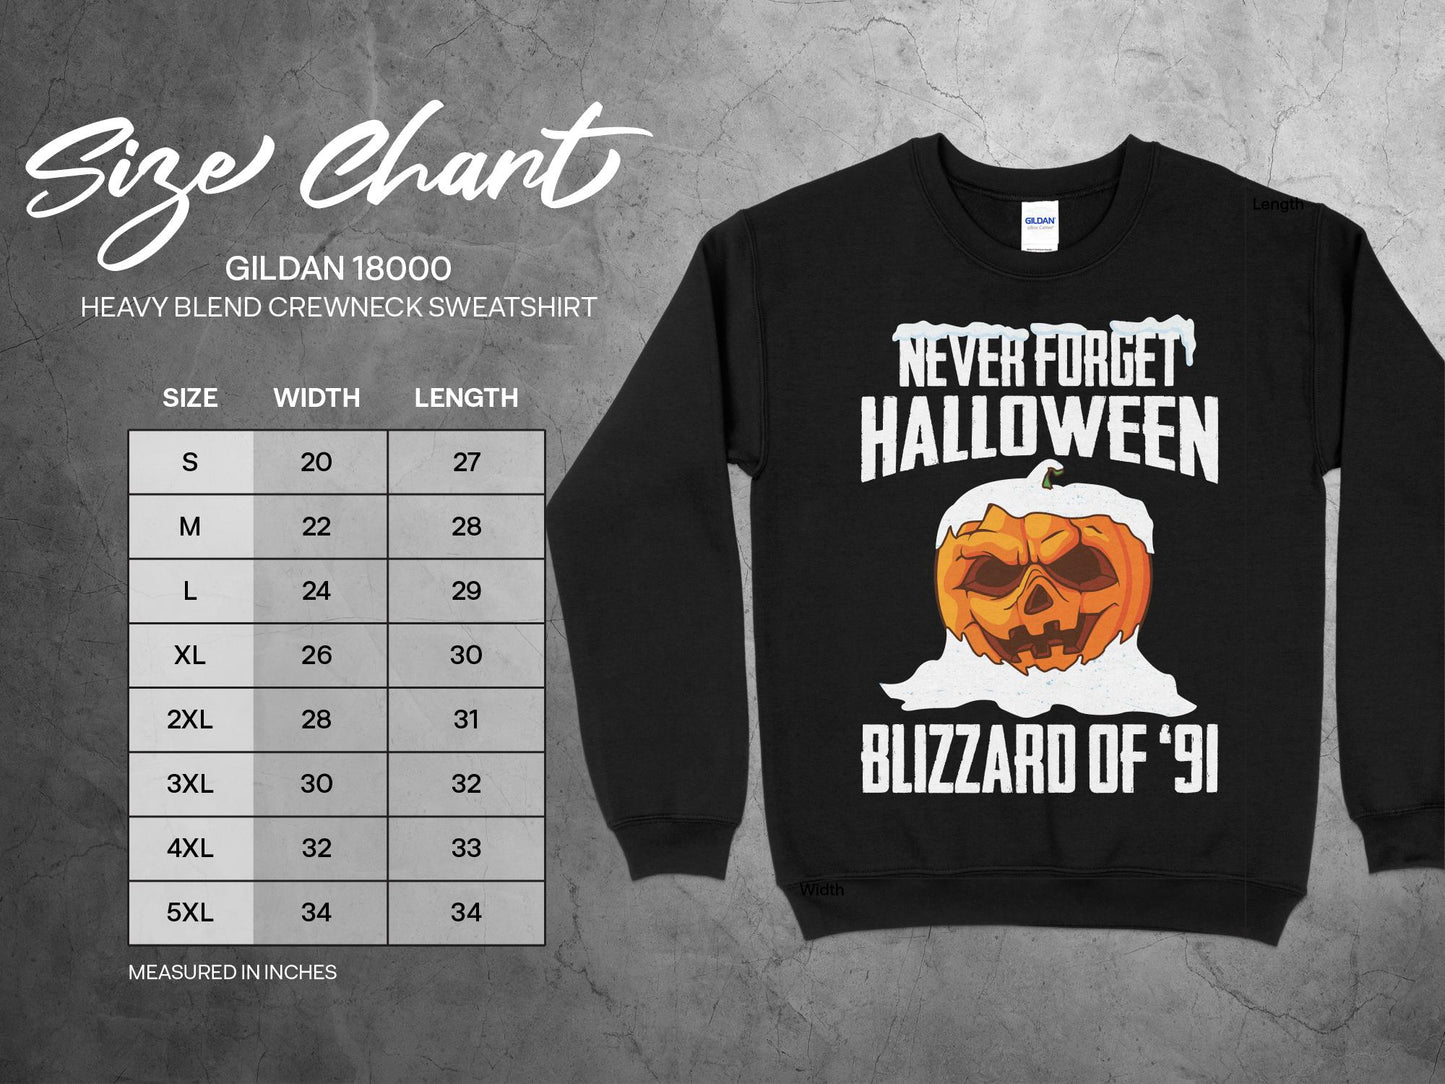 Minnesota Blizzard Halloween 1991 Sweatshirt, sizing chart